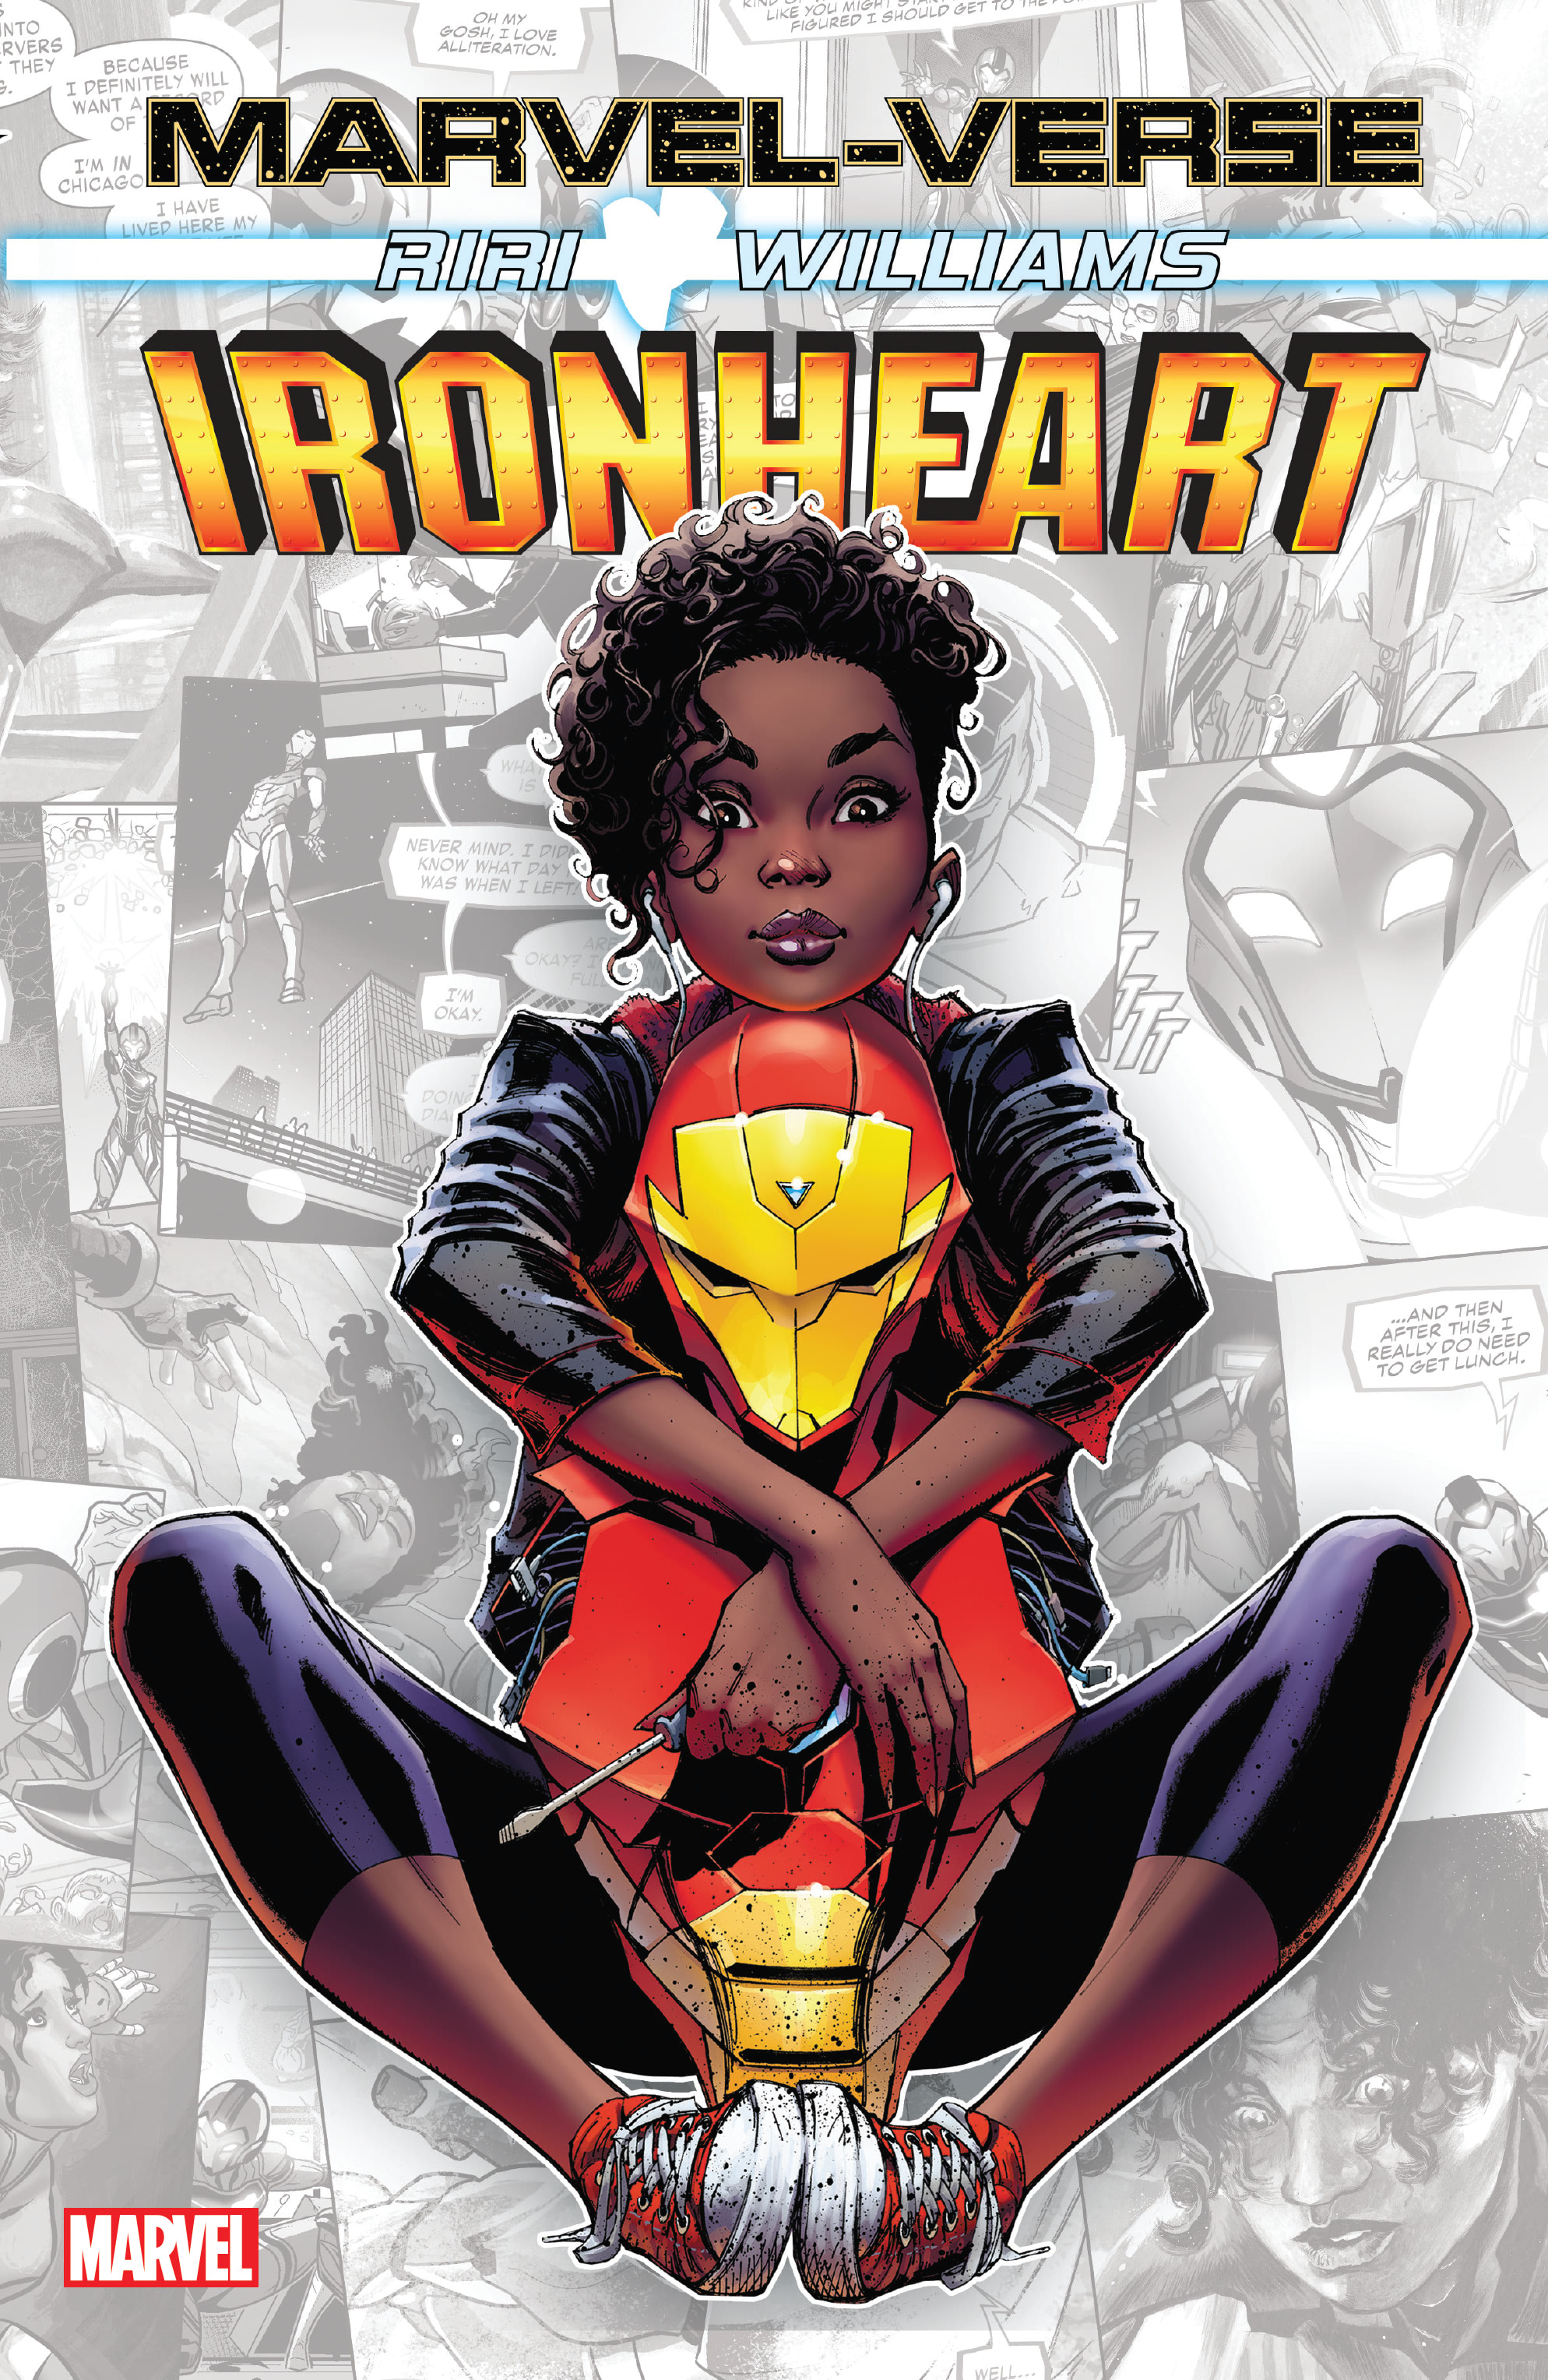 Read online Marvel-Verse: Ironheart comic -  Issue # TPB - 1